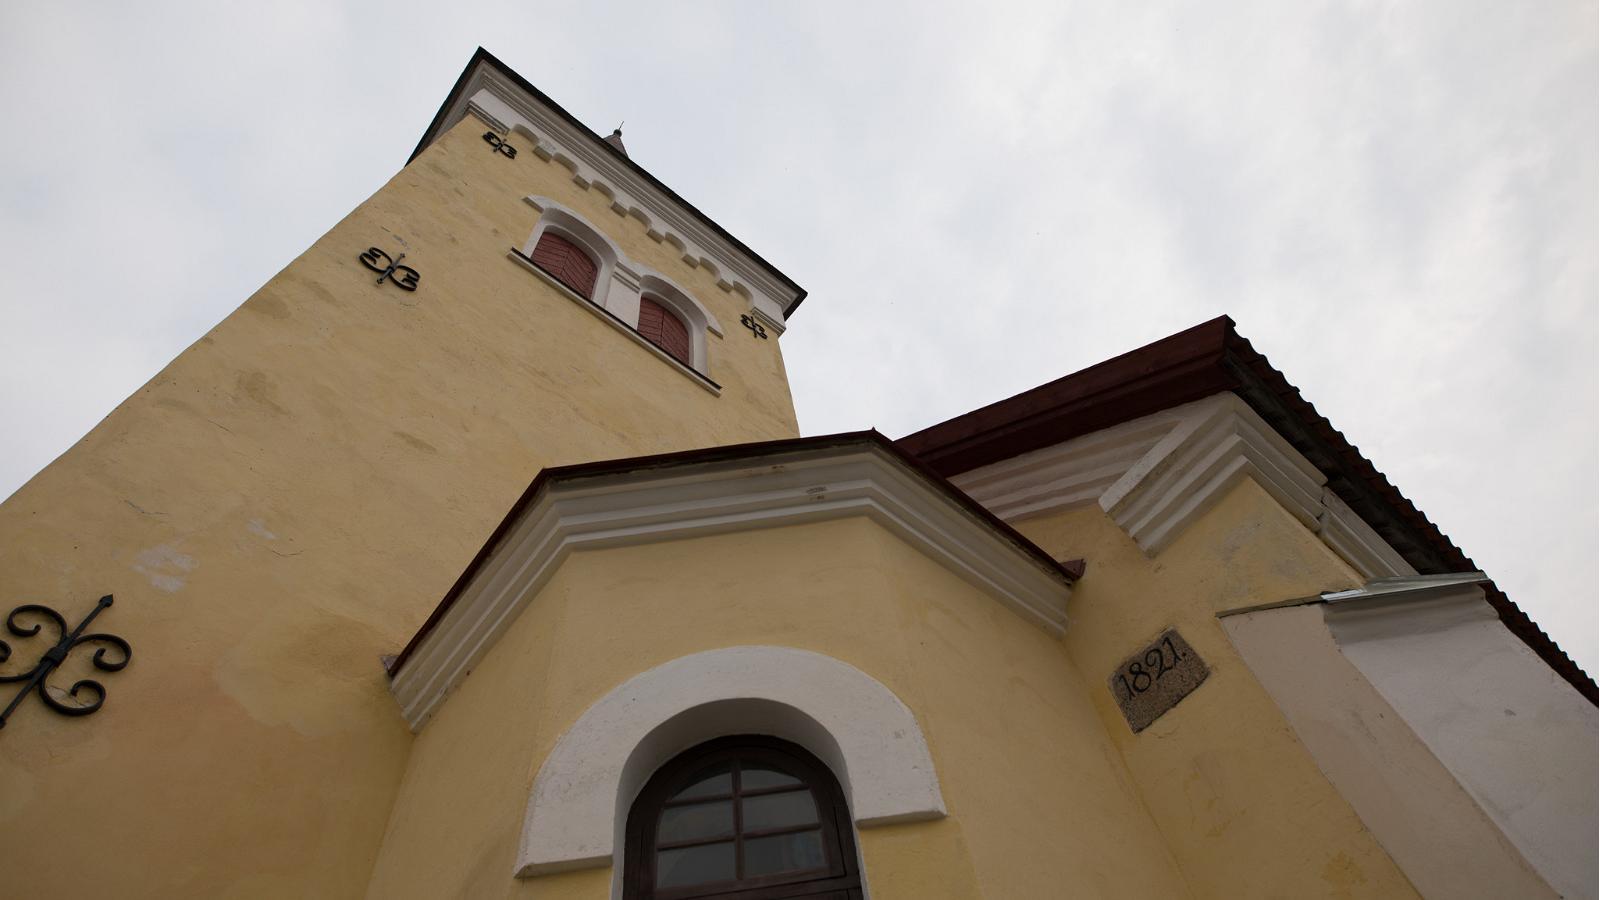 Estonian Evangelical Lutheran Church – St. Peter’s Church in Kõpu